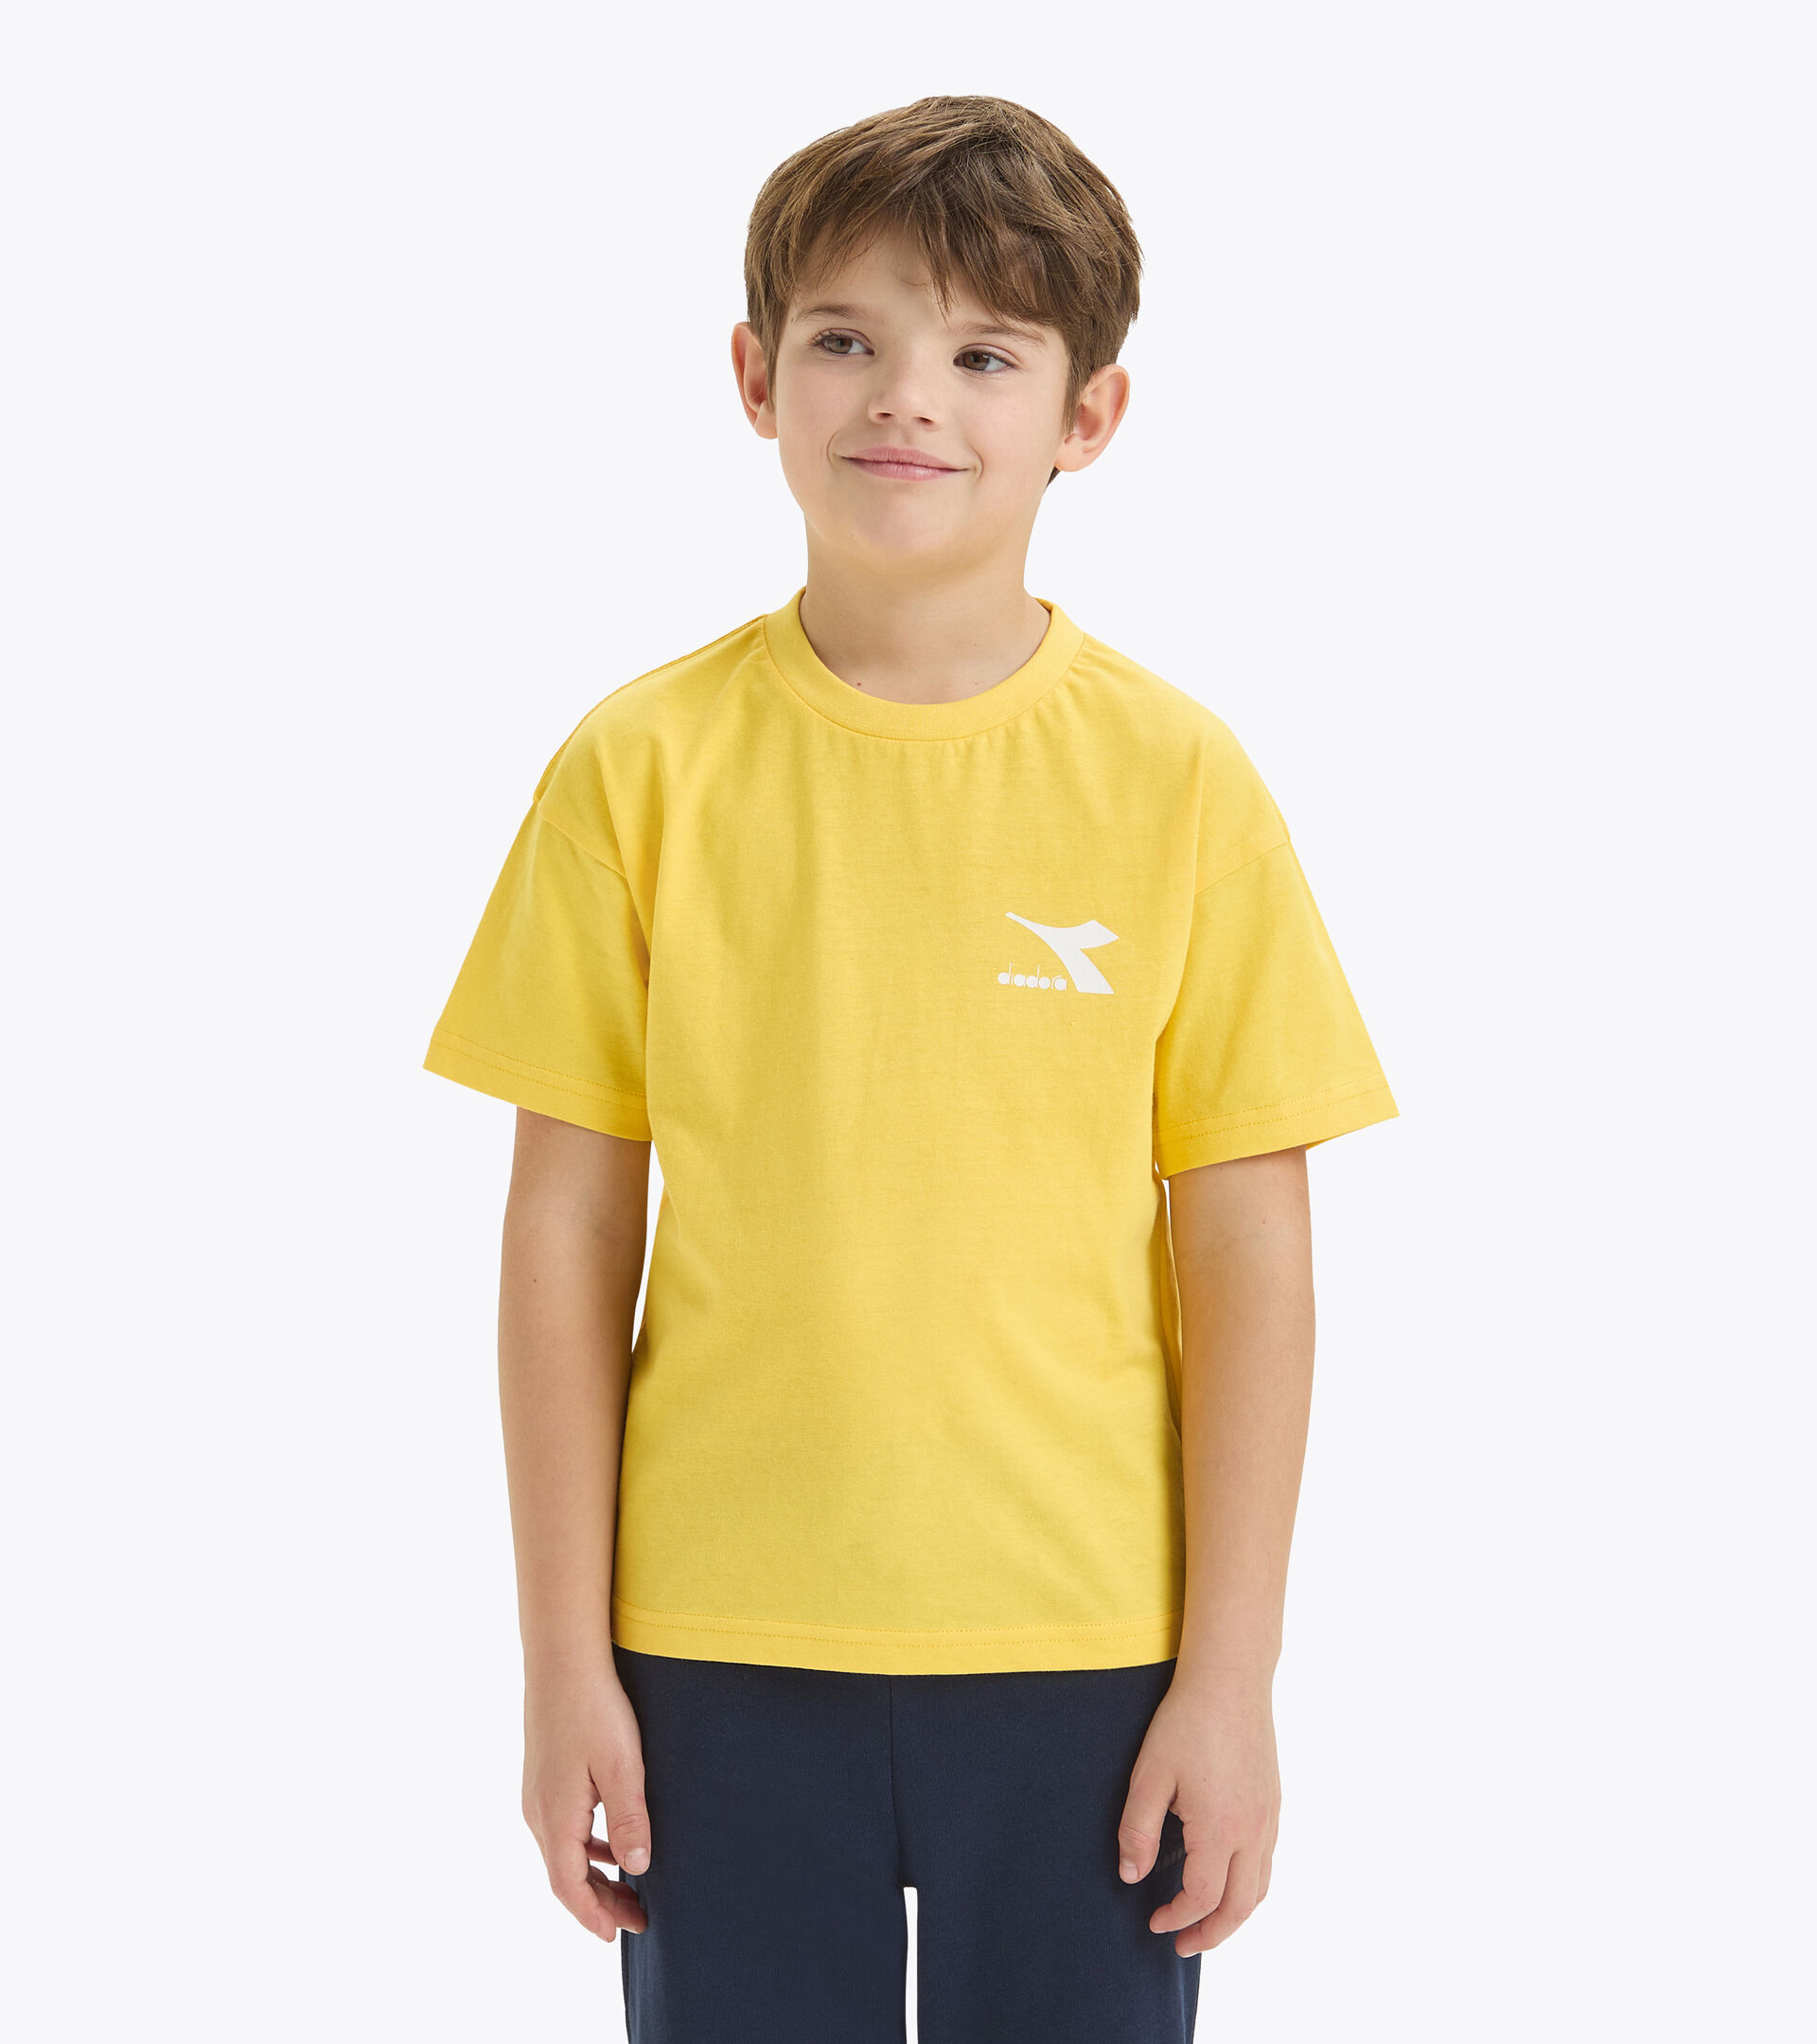 Camiseta de algodón - Niños y niñas
 JU.T-SHIRT SS SL AMARILLO ALAMO TEMBLON OR - Diadora